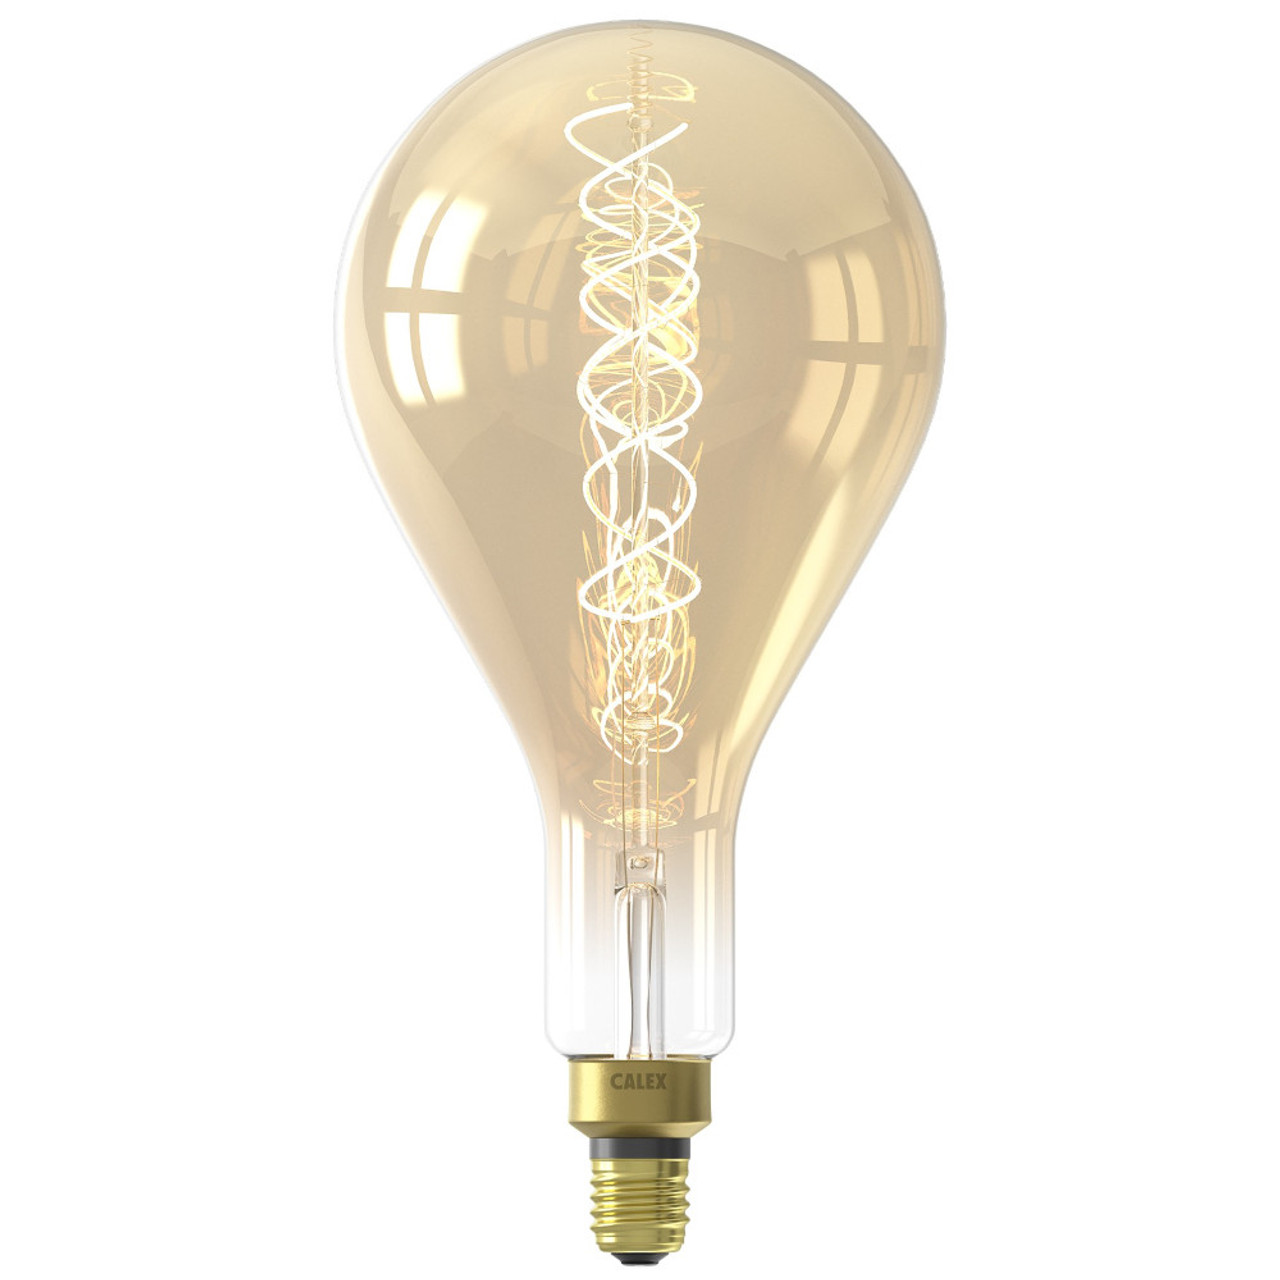 Calex LED Filament Splash Lamp 240V 3W 250lm E27 Gold 2200K Dimmable